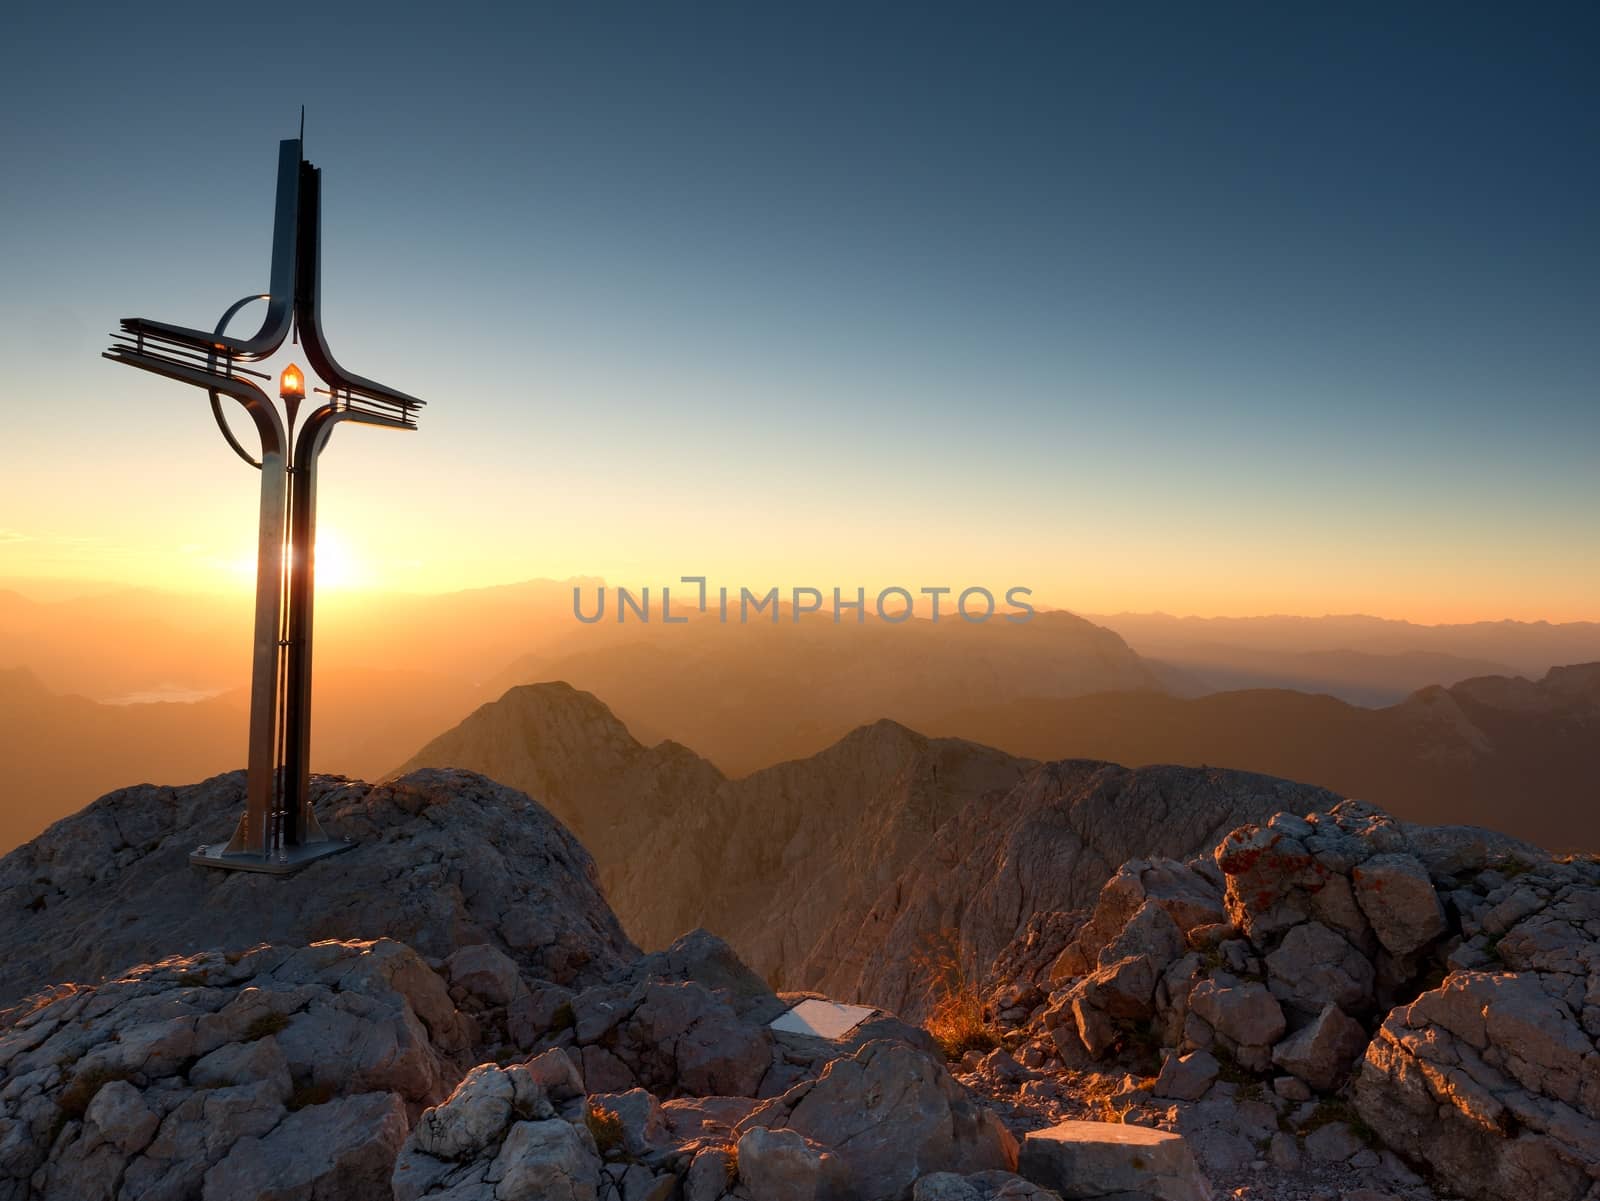 Cross raised  at mountain summit  in Alps. Sharp peak, daybreak Sun in sky. Steel crucifix in memory of victims of mountains. Vivid photo.